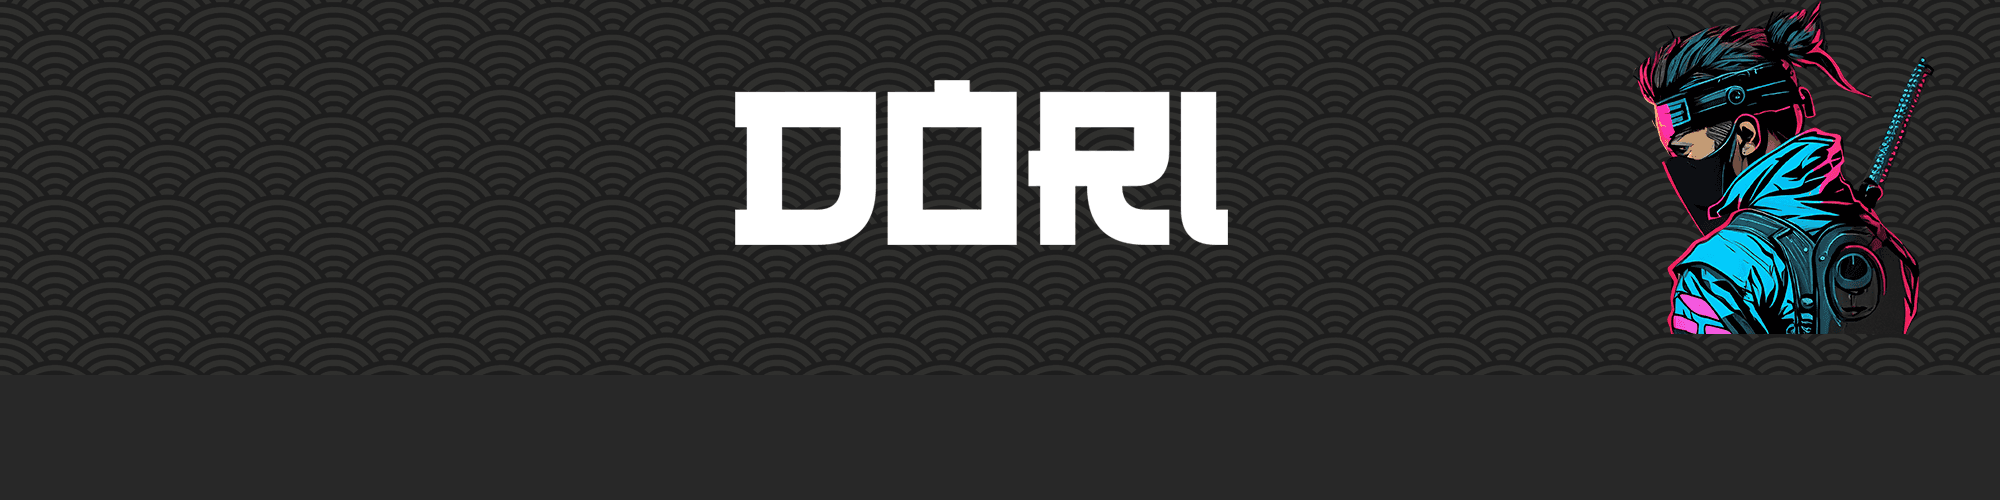 Dori_Deployer banner